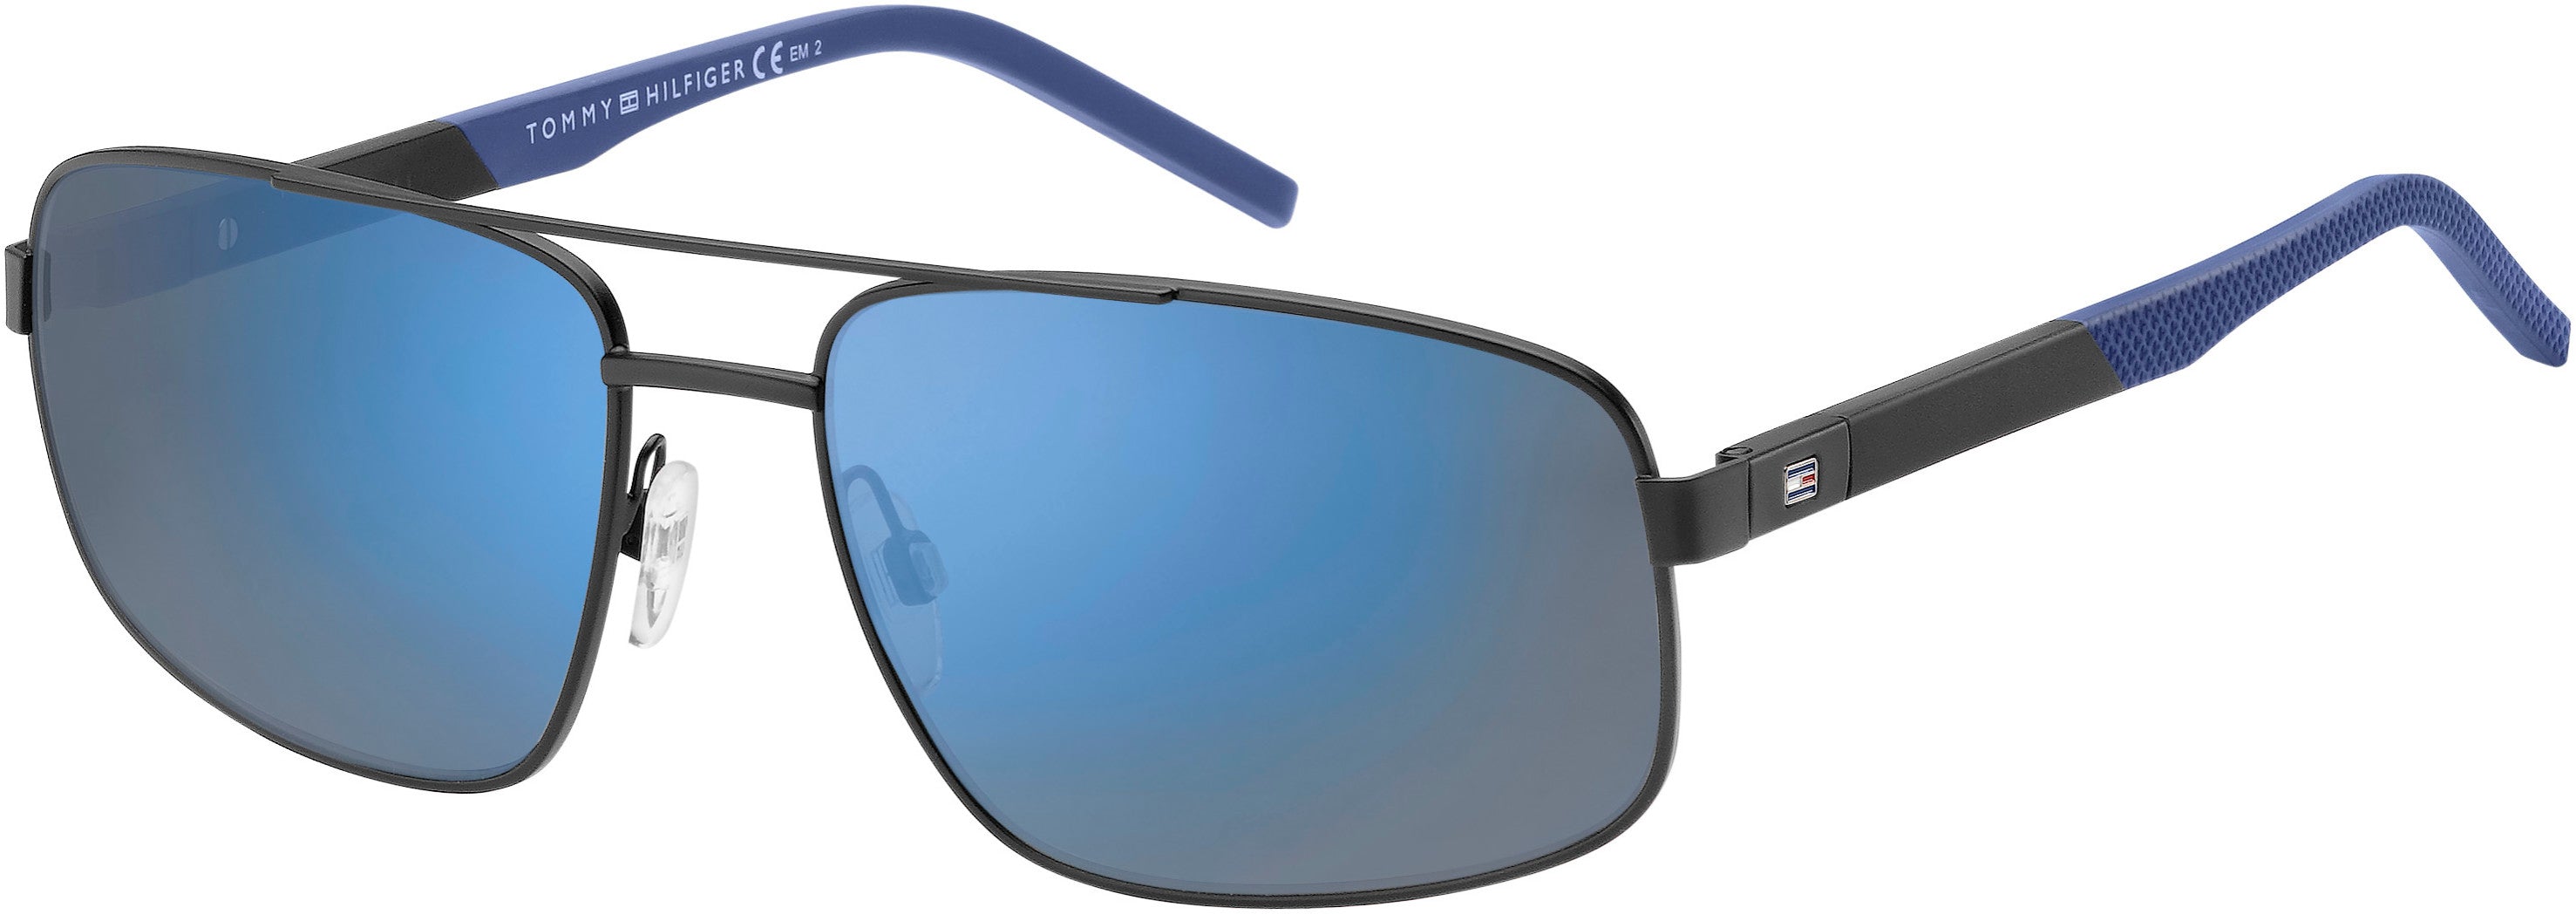 Tommy Hilfiger T. Hilfiger 1651/S Navigator Sunglasses 0003-0003  Matte Black (2Y Blue Mirror)